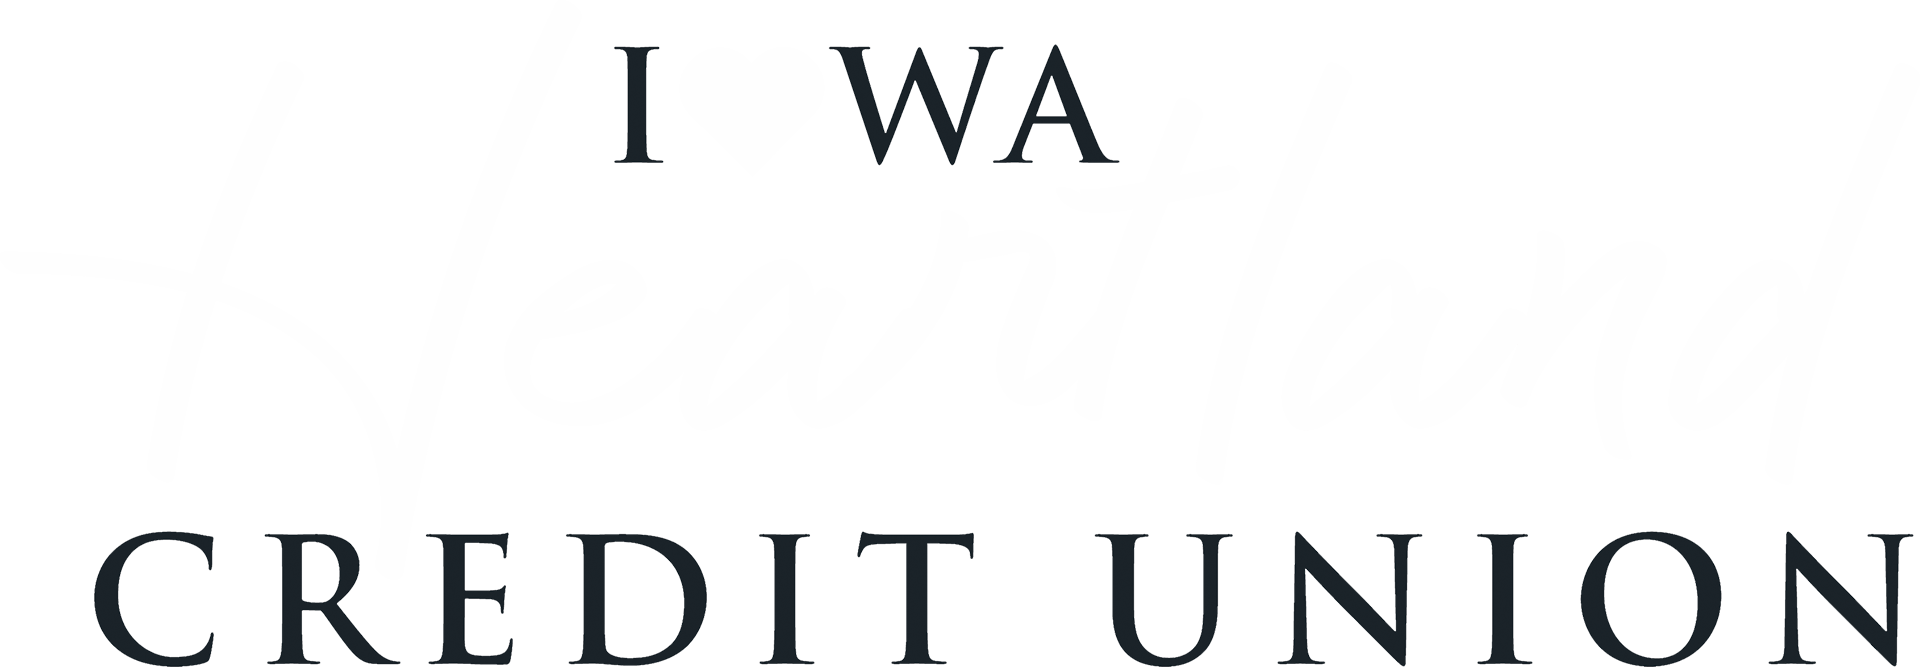 Iowa Heartland Credit Union Logo